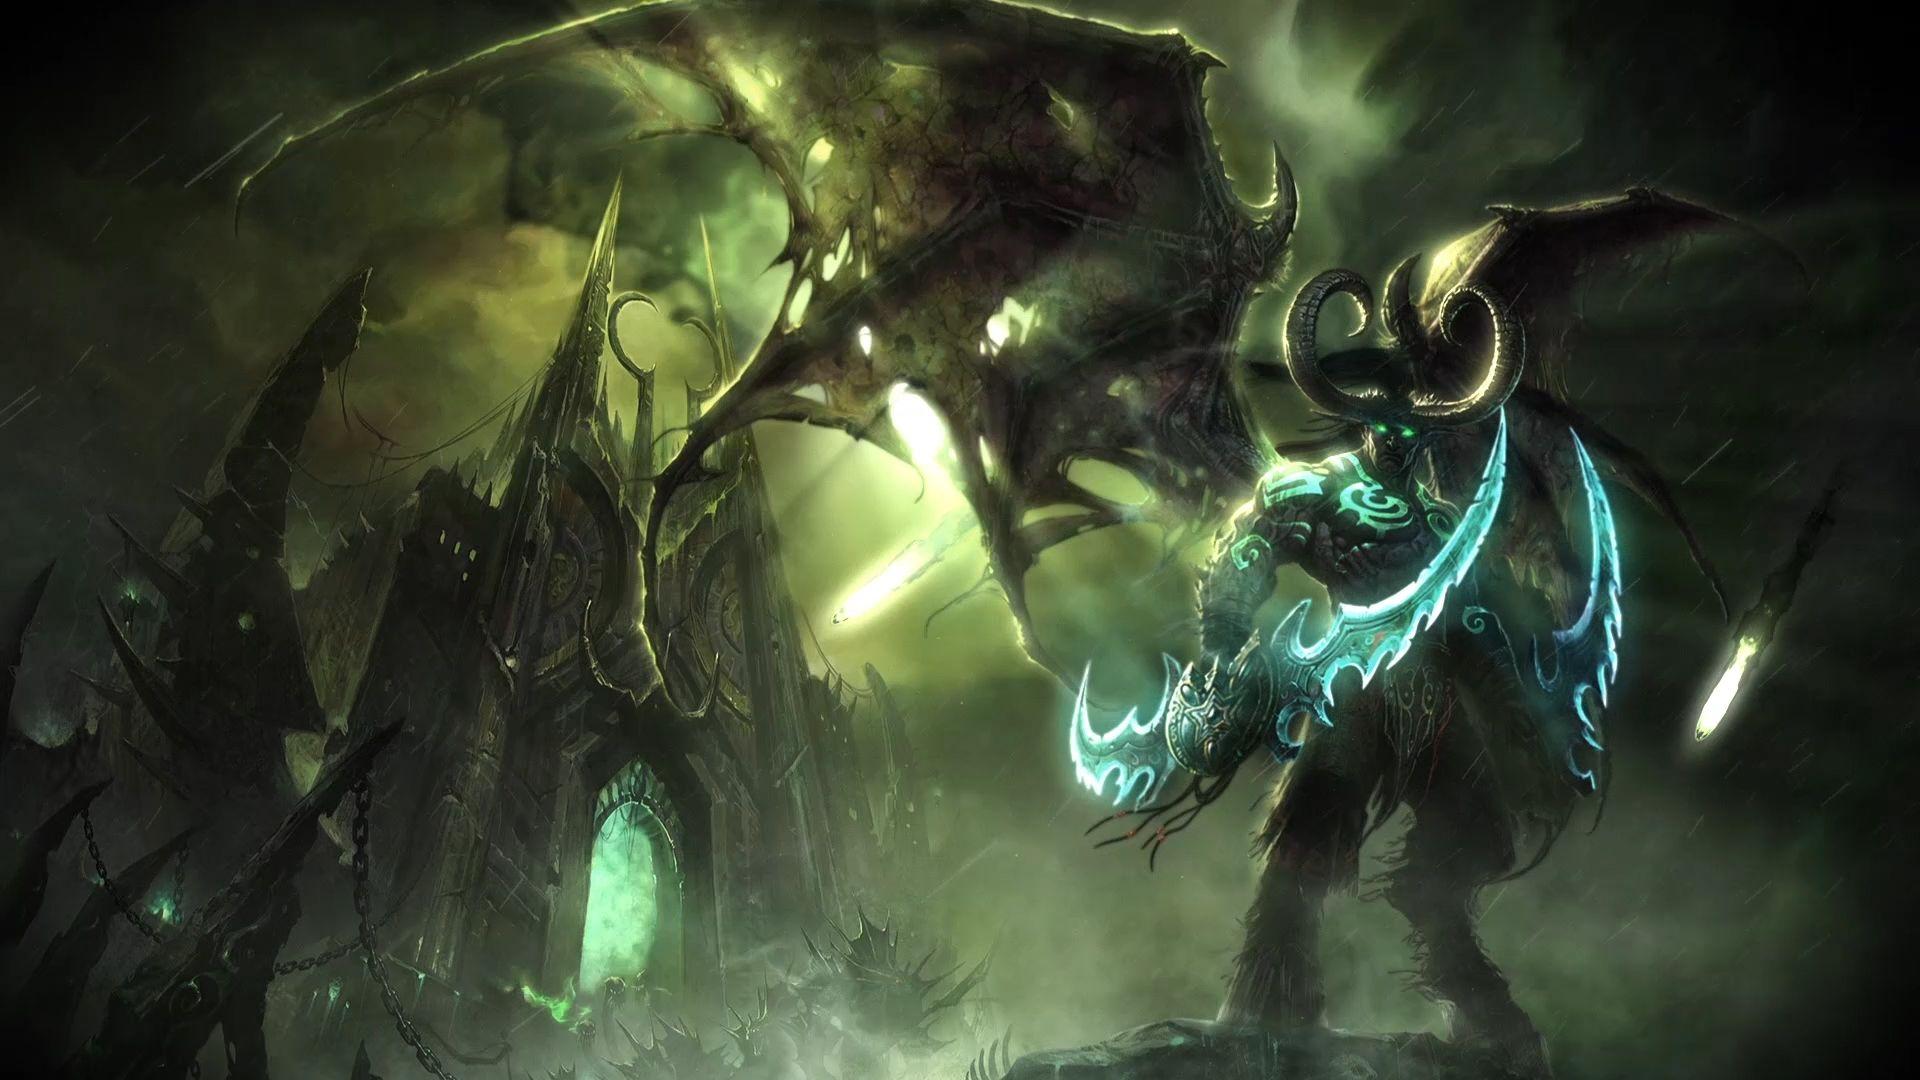 Wallpaper Engine Stormrage by Night [World Of Warcraft]